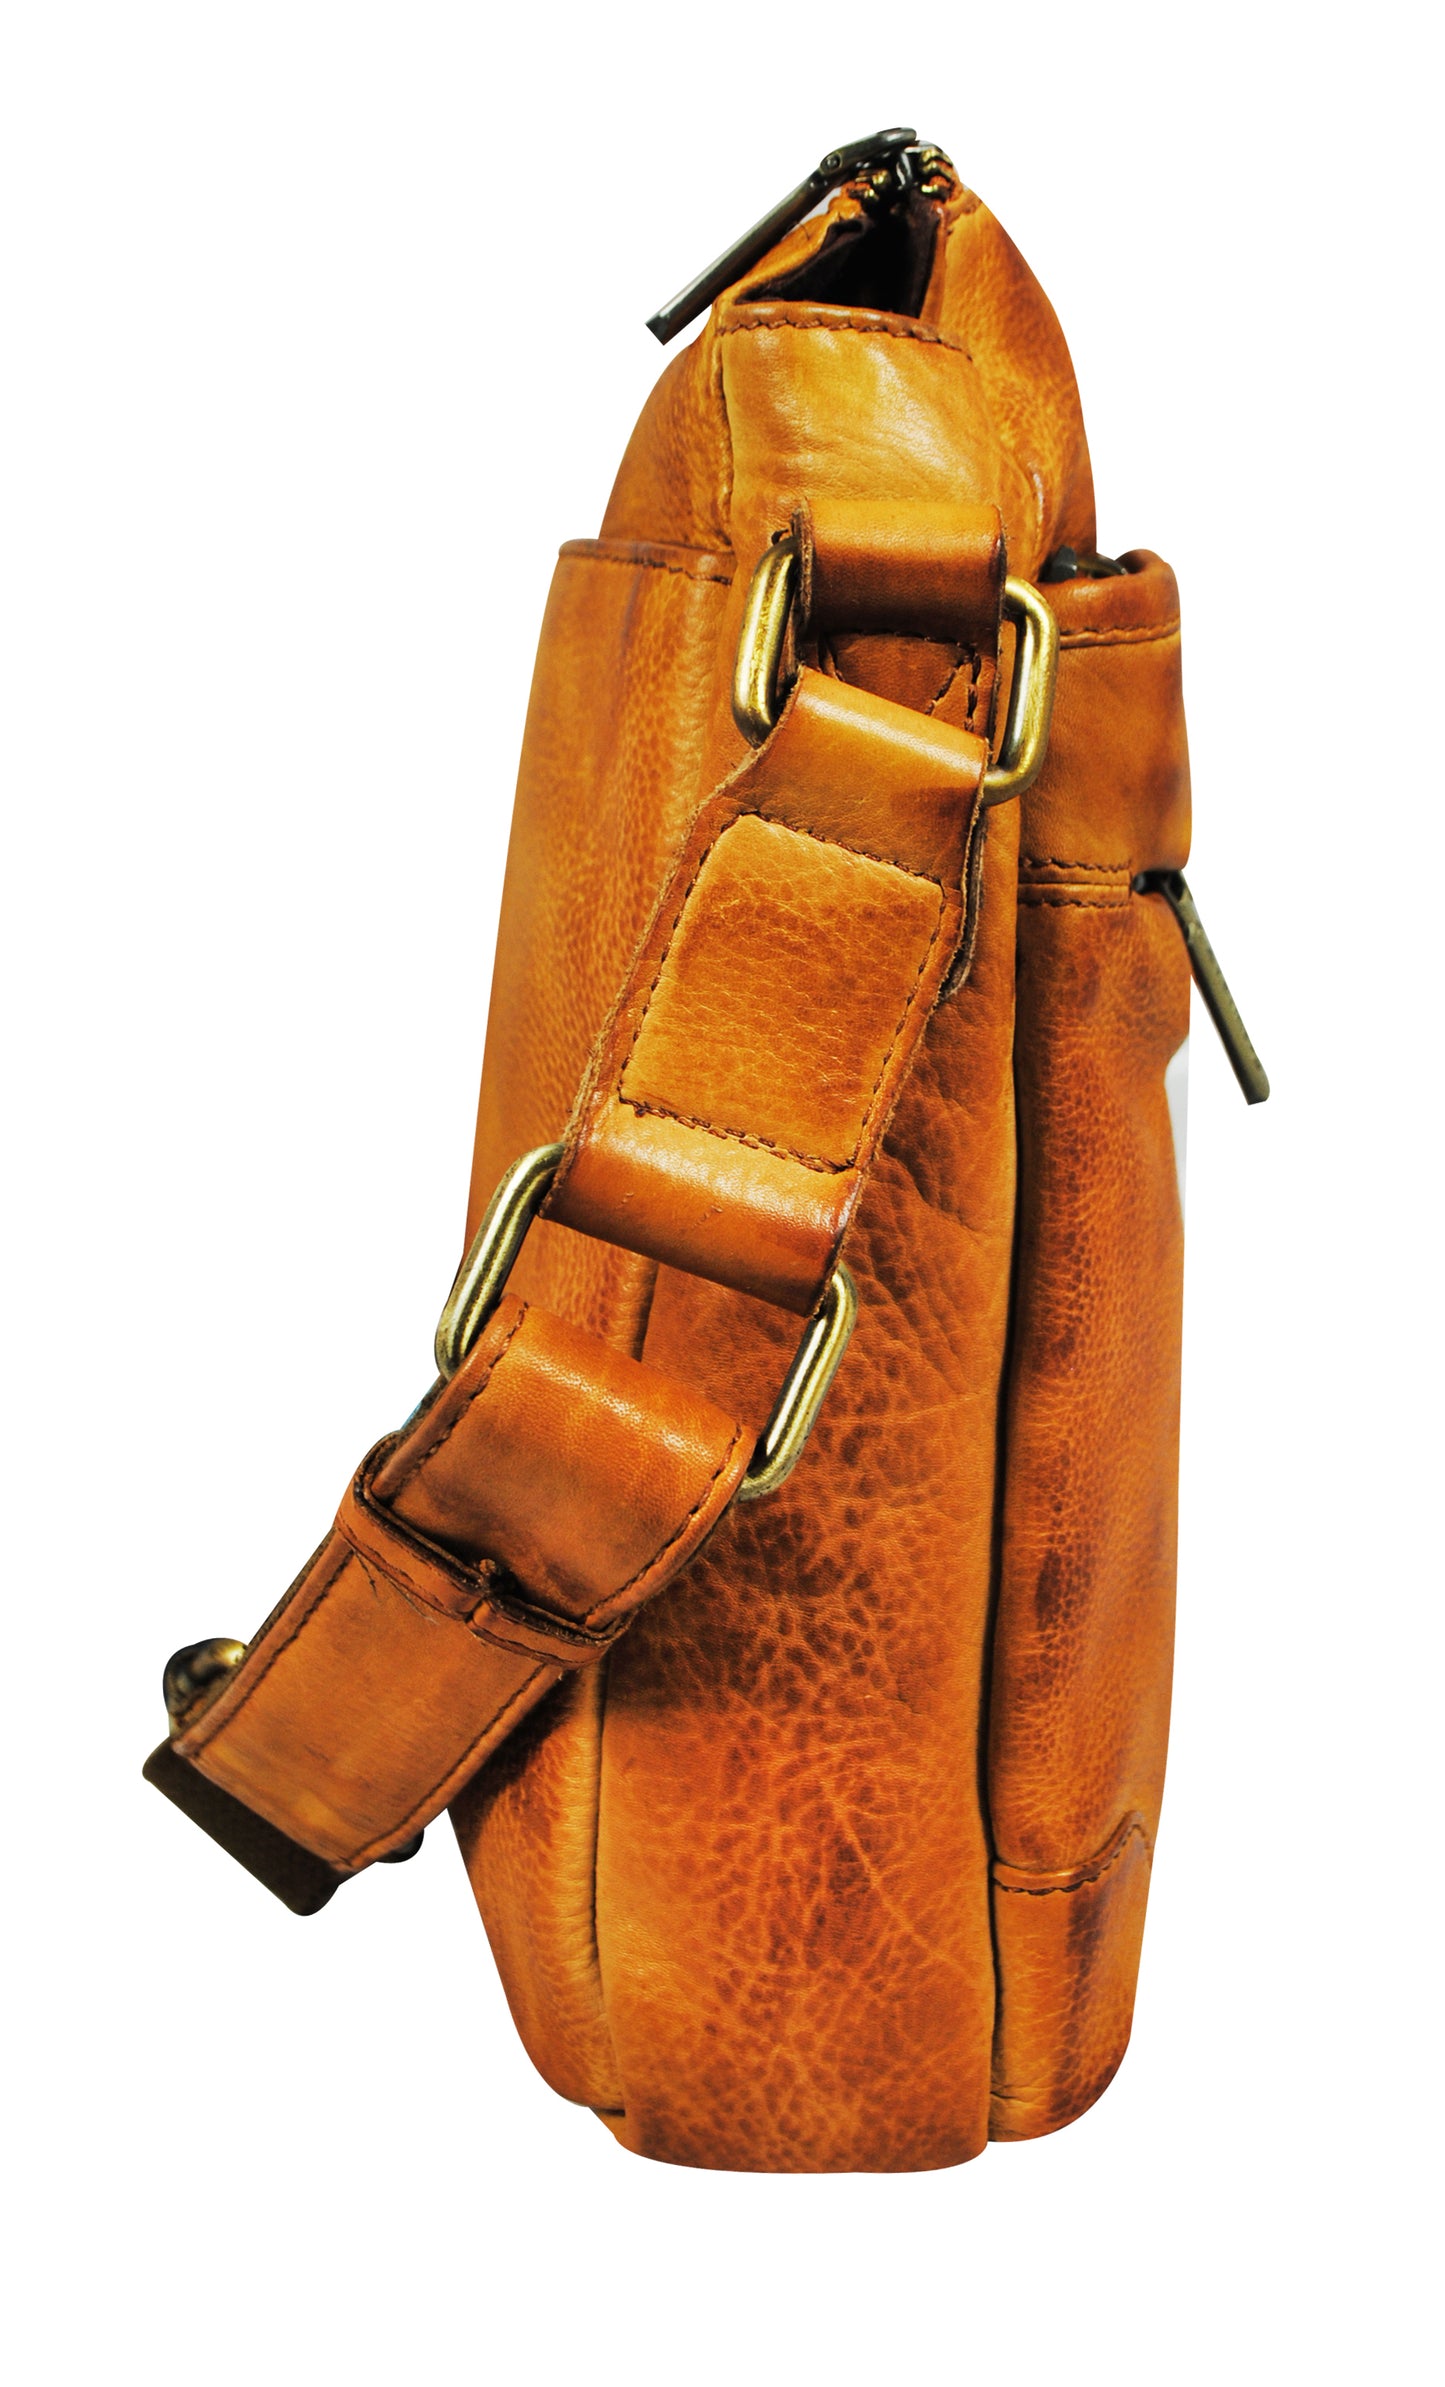 Calfnero Genuine Leather Men's Cross Body Bag (805-Camel)